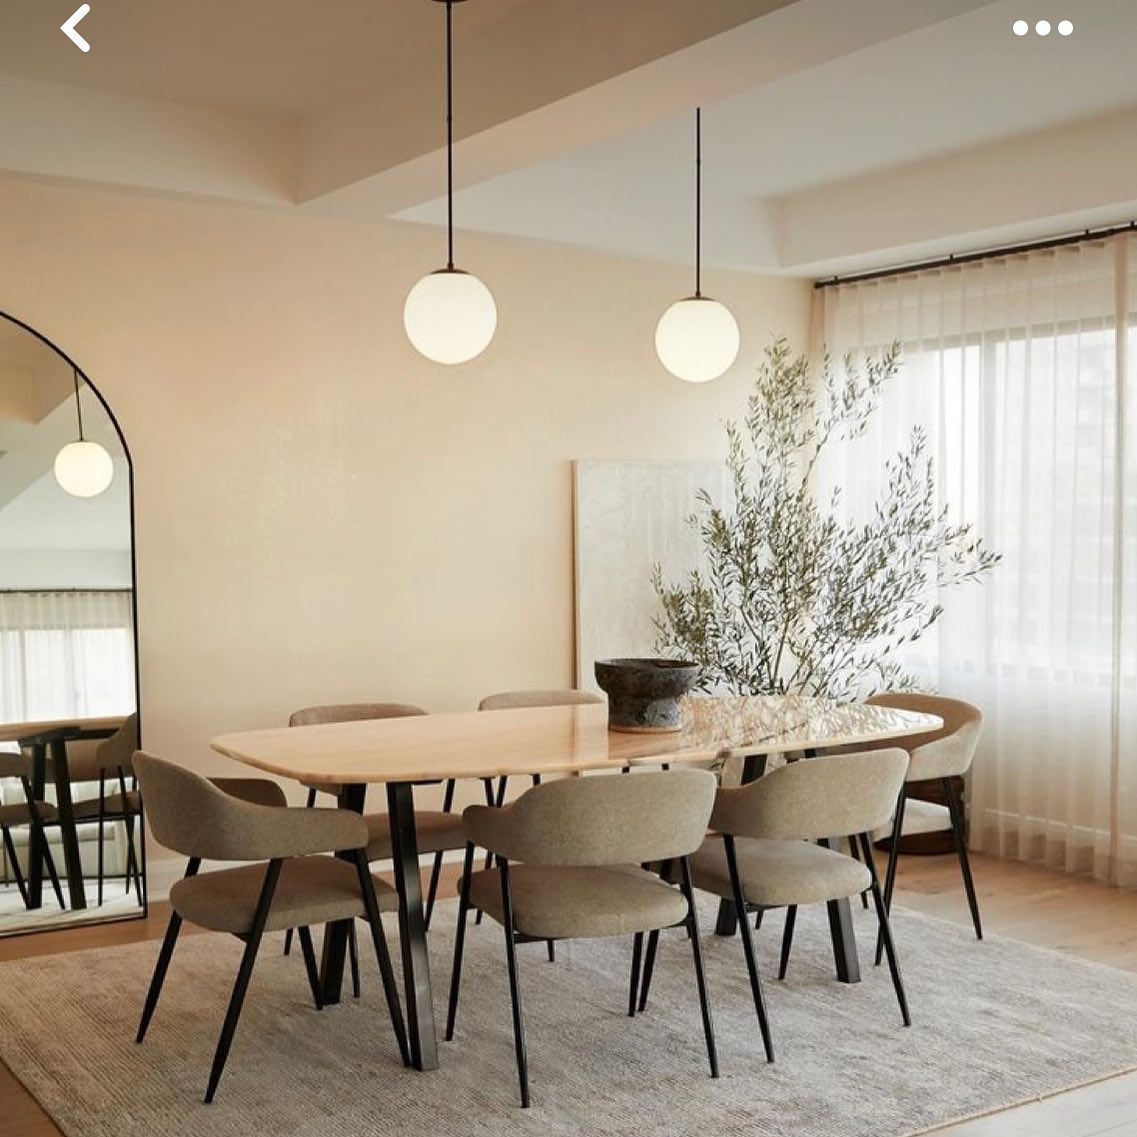 estilo minimalista em sala de jantar